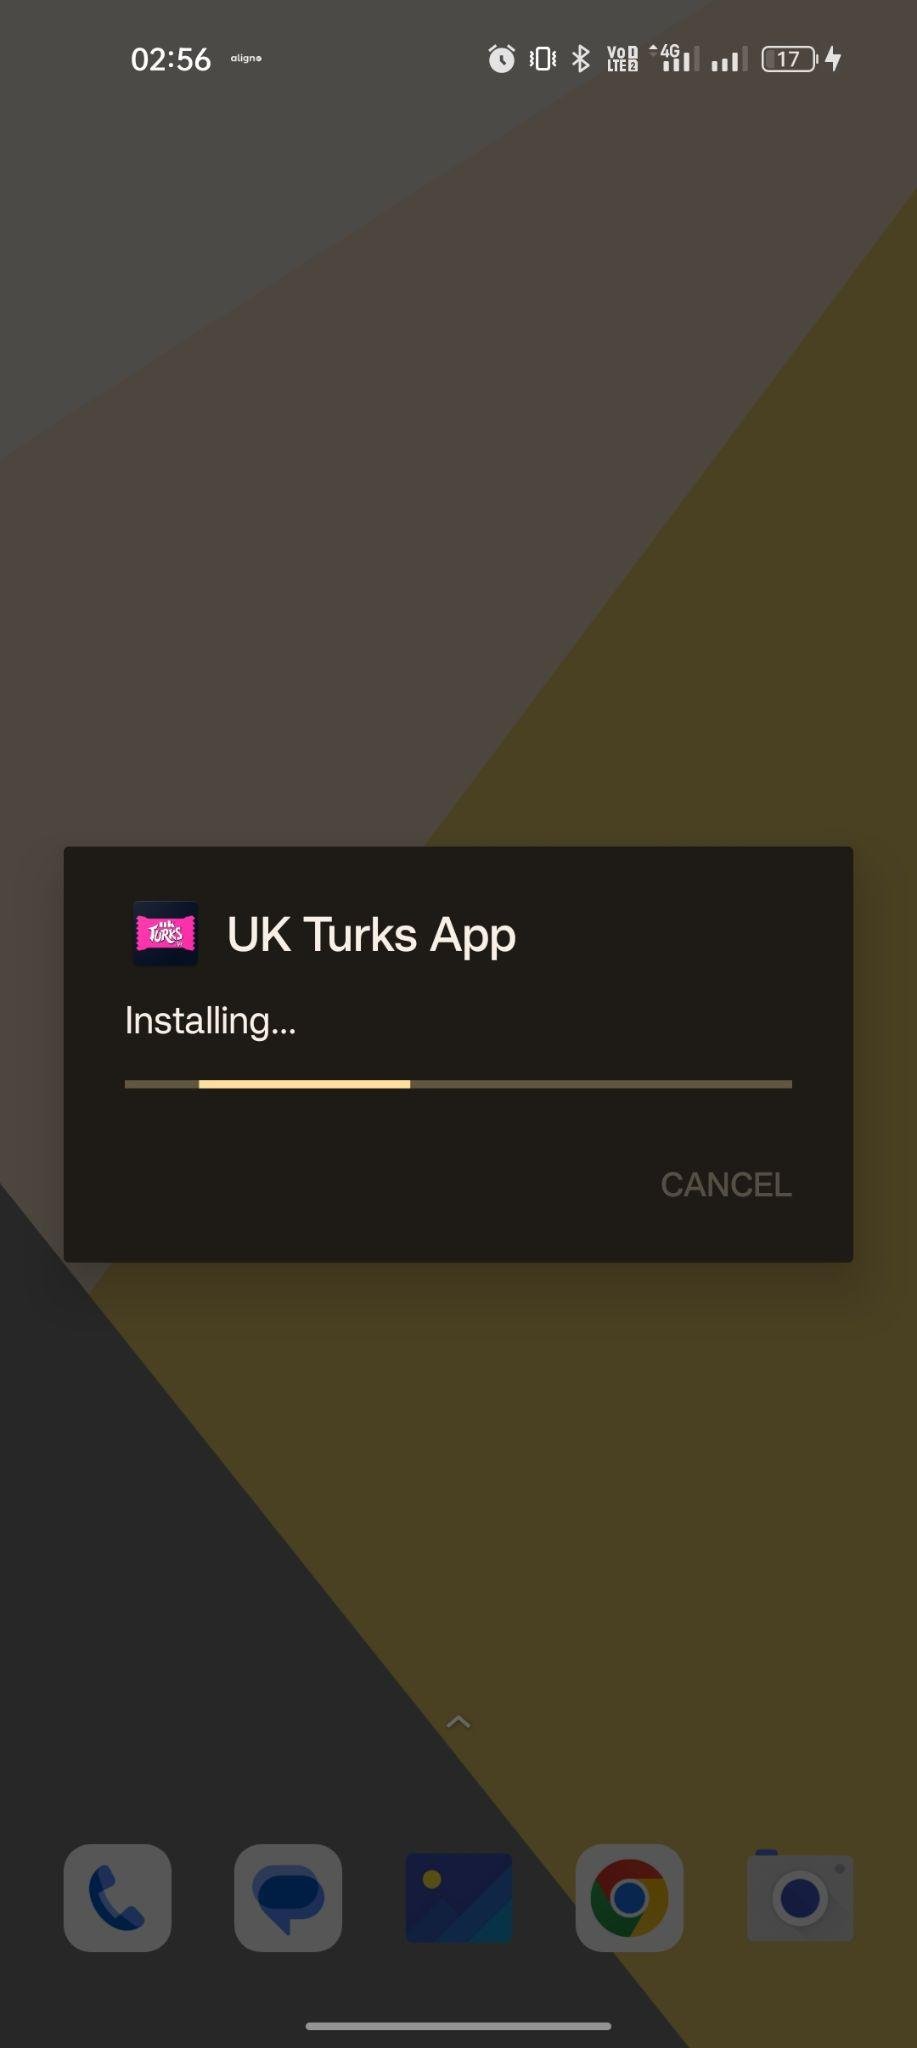 UK Turks apk installing